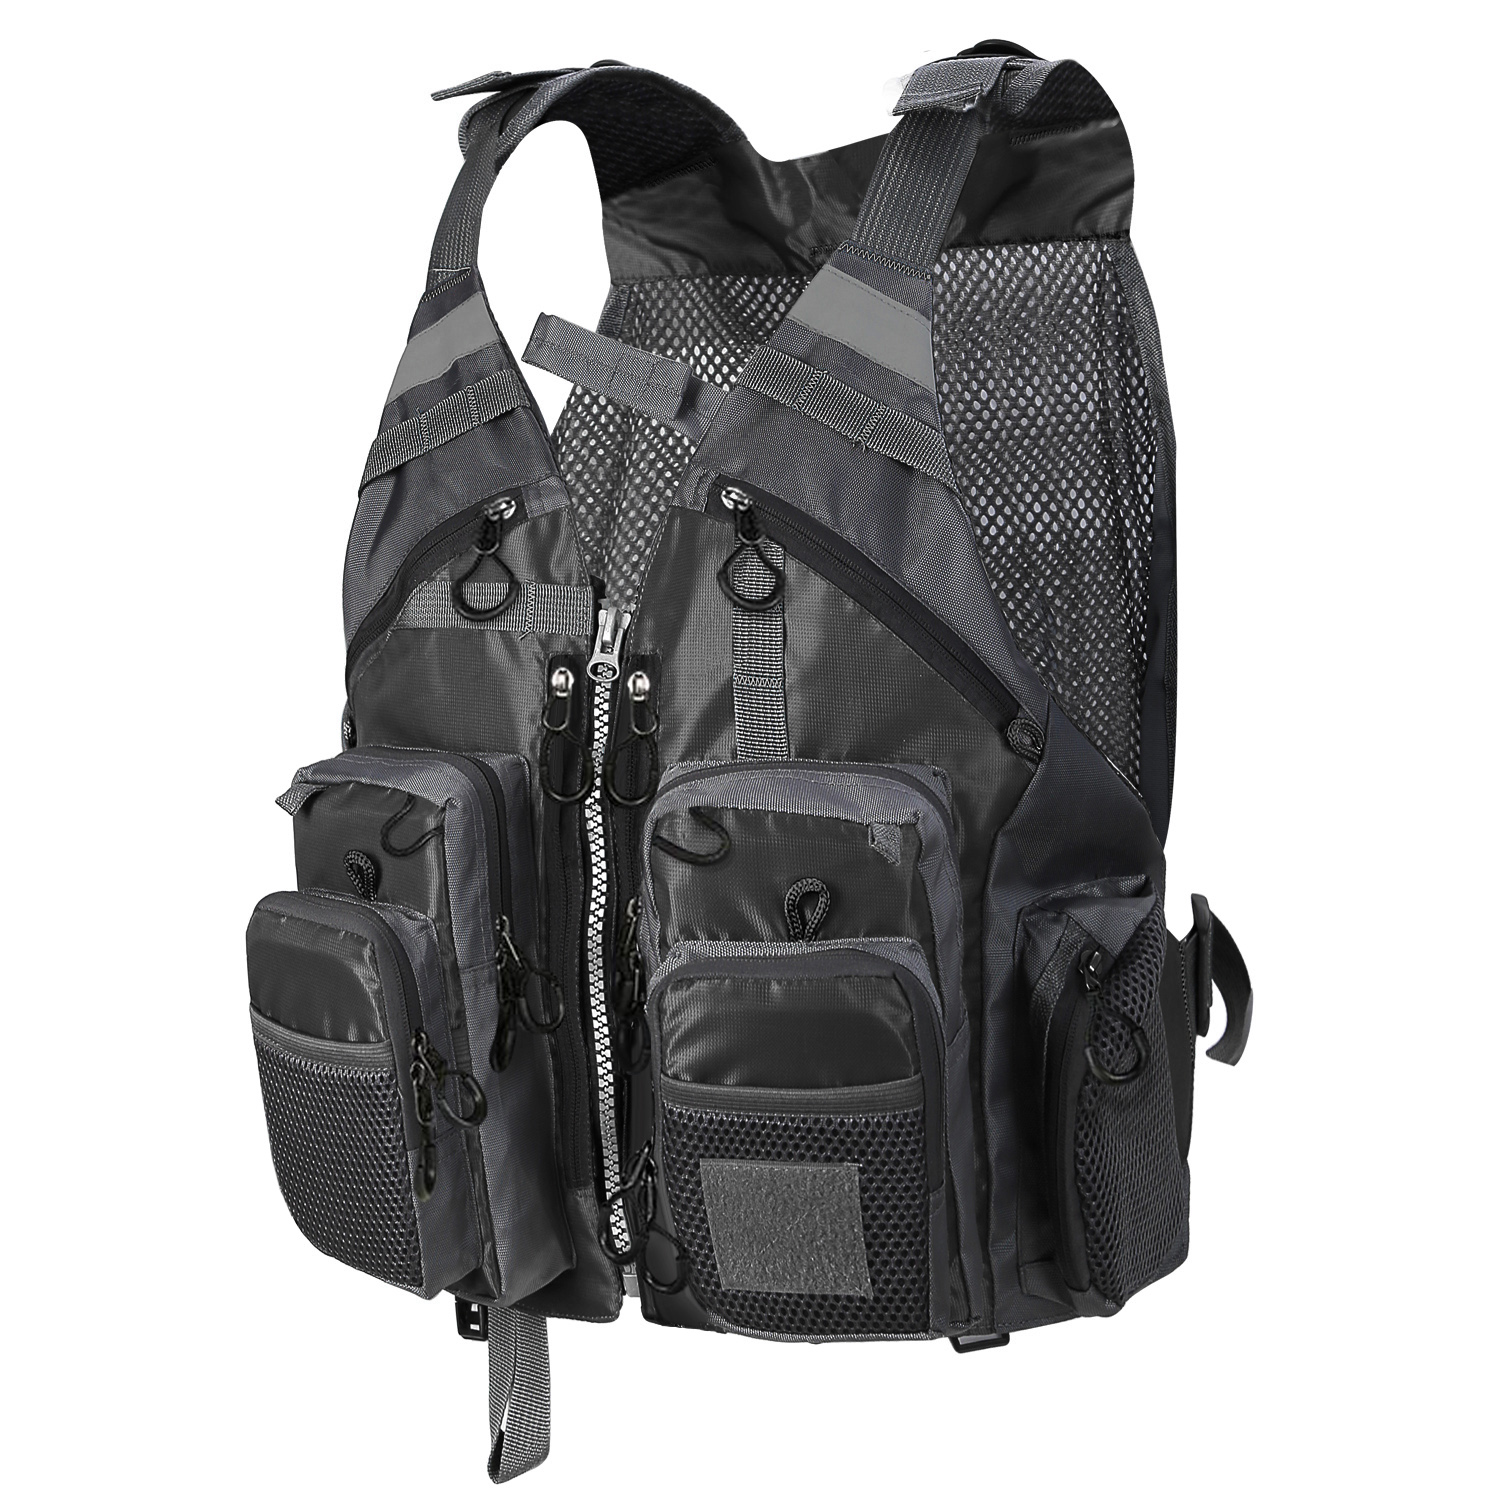 Maxcatch Fly Fishing Vest Backpack Multi-pocket Chest Mesh Bag Adjustable Size